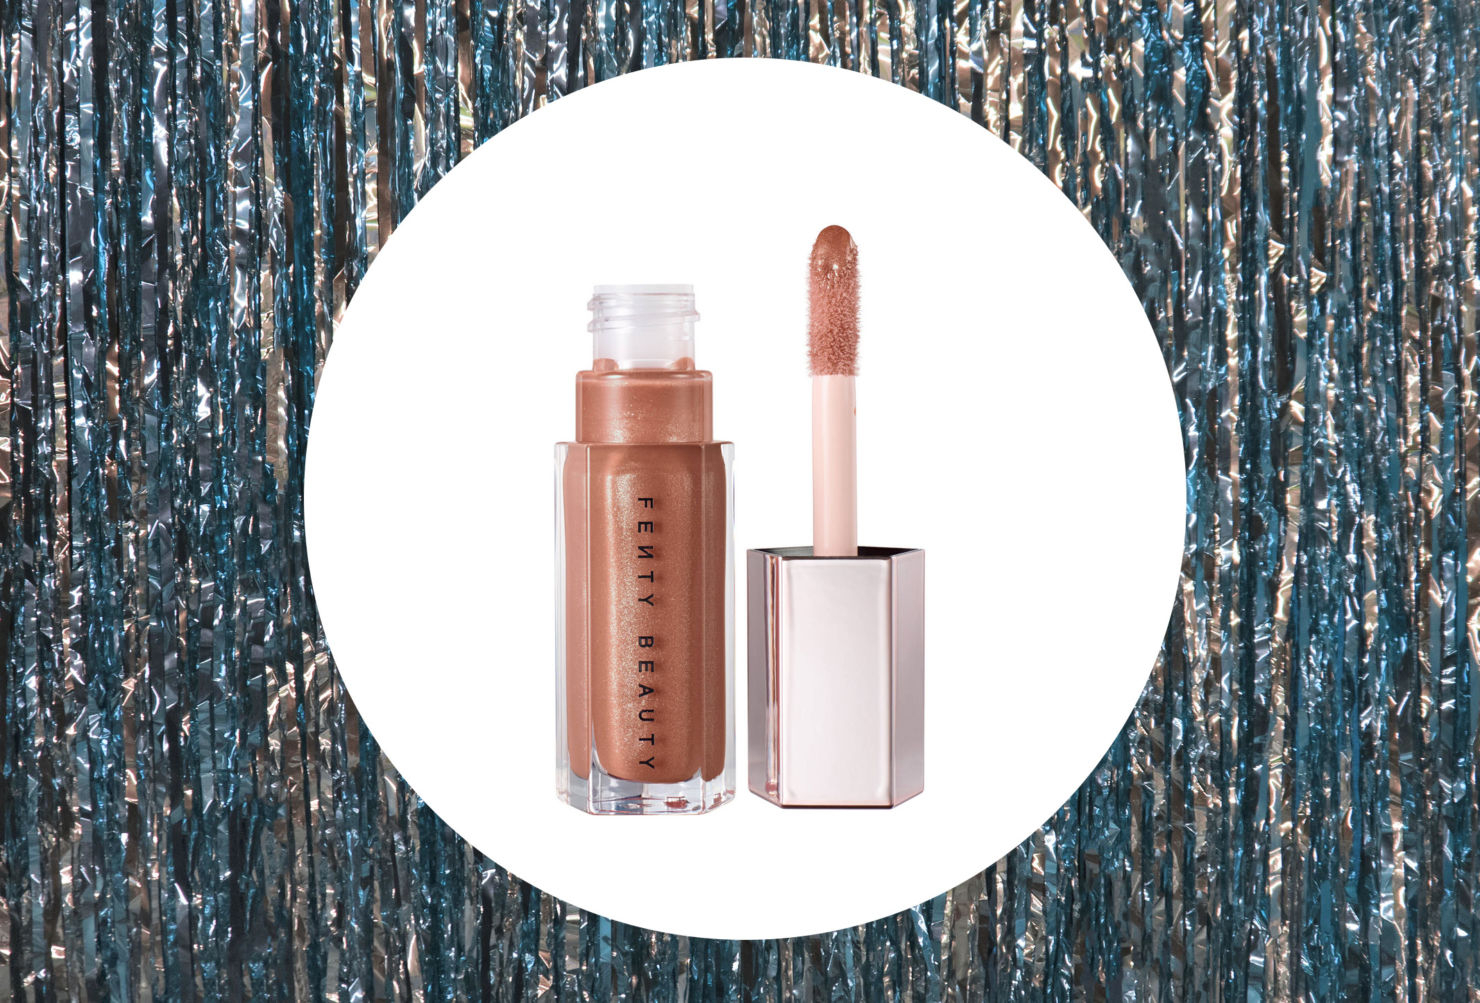 Los mejores lip glosses para tu look de verano 2020 - gloss-bomb-universal-lip-luminizer